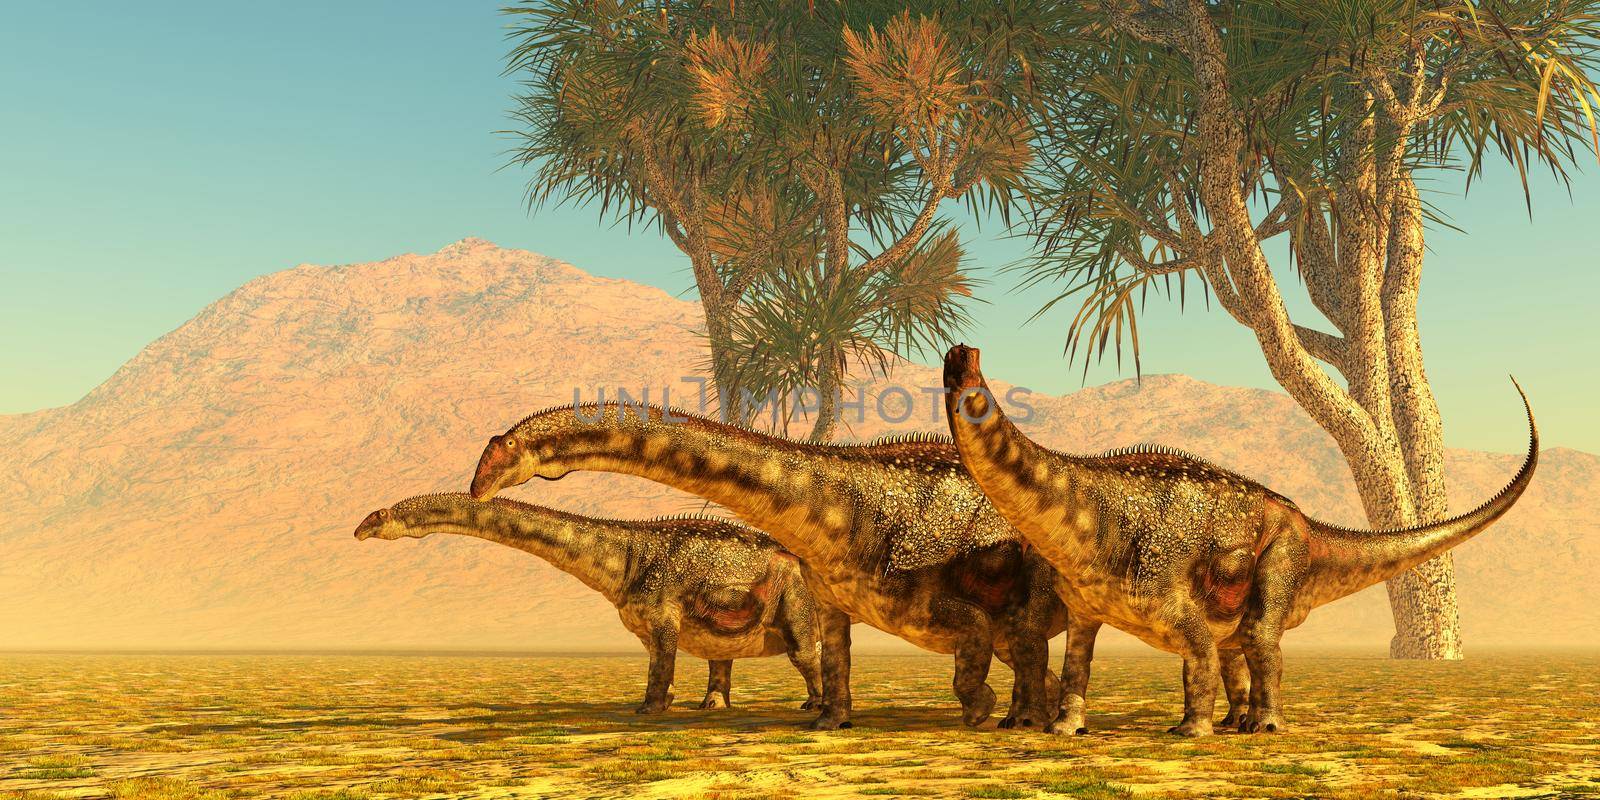 Diamantinasaurus was a herbivorous sauropod dinosaur that lived in herds in Australia during the Cretaceous Period.